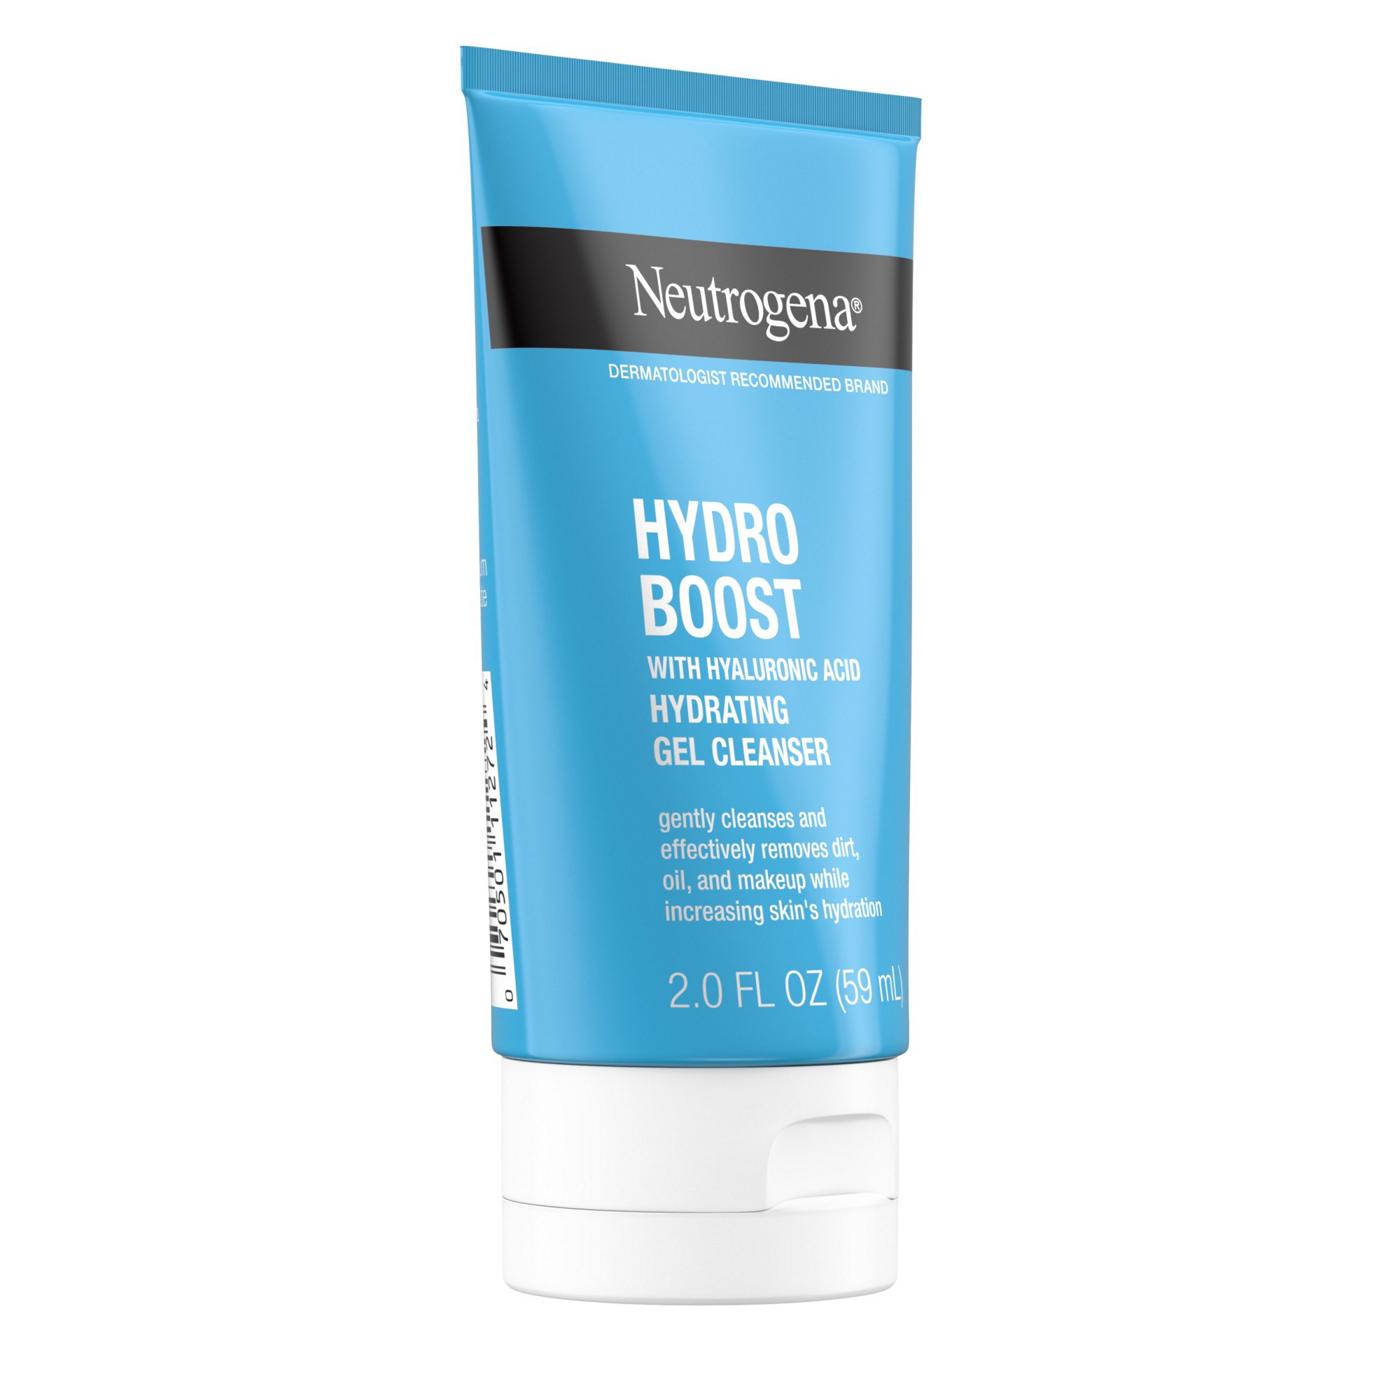 Neutrogena Hydro Boost Hydrating Gel Cleanser; image 3 of 3